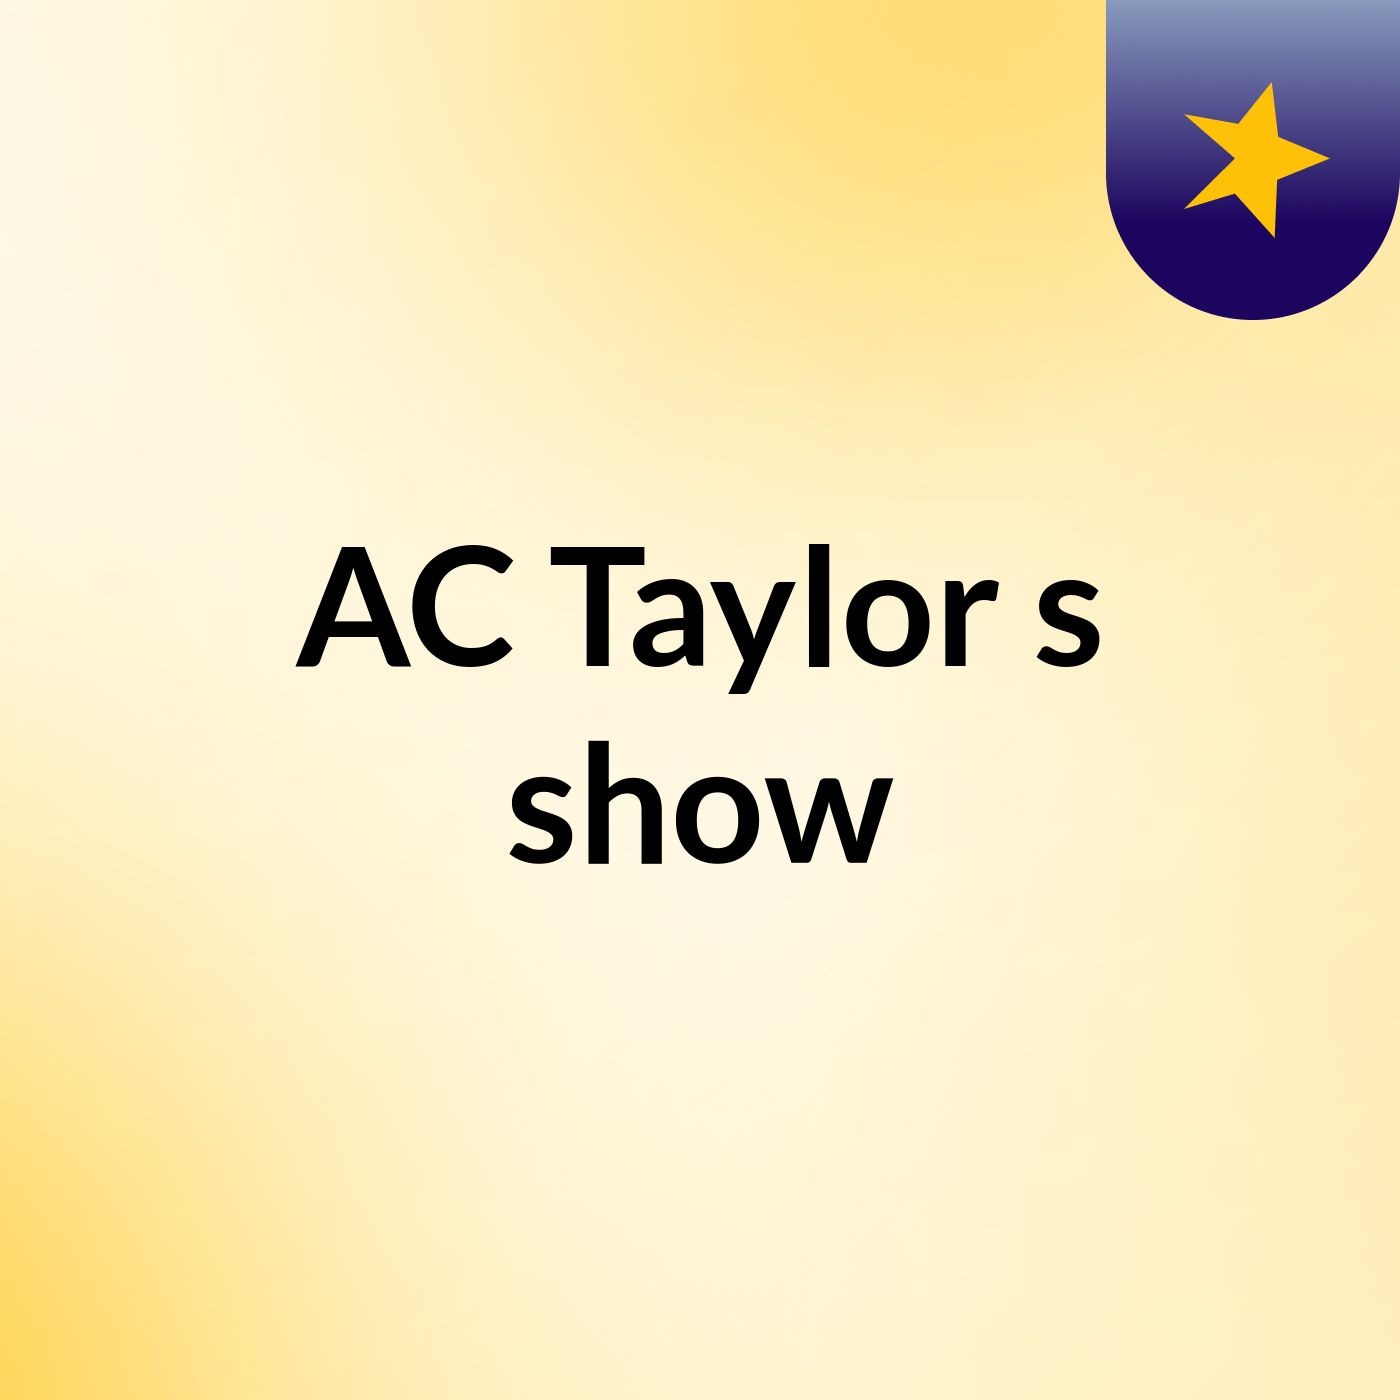 AC Taylor's show